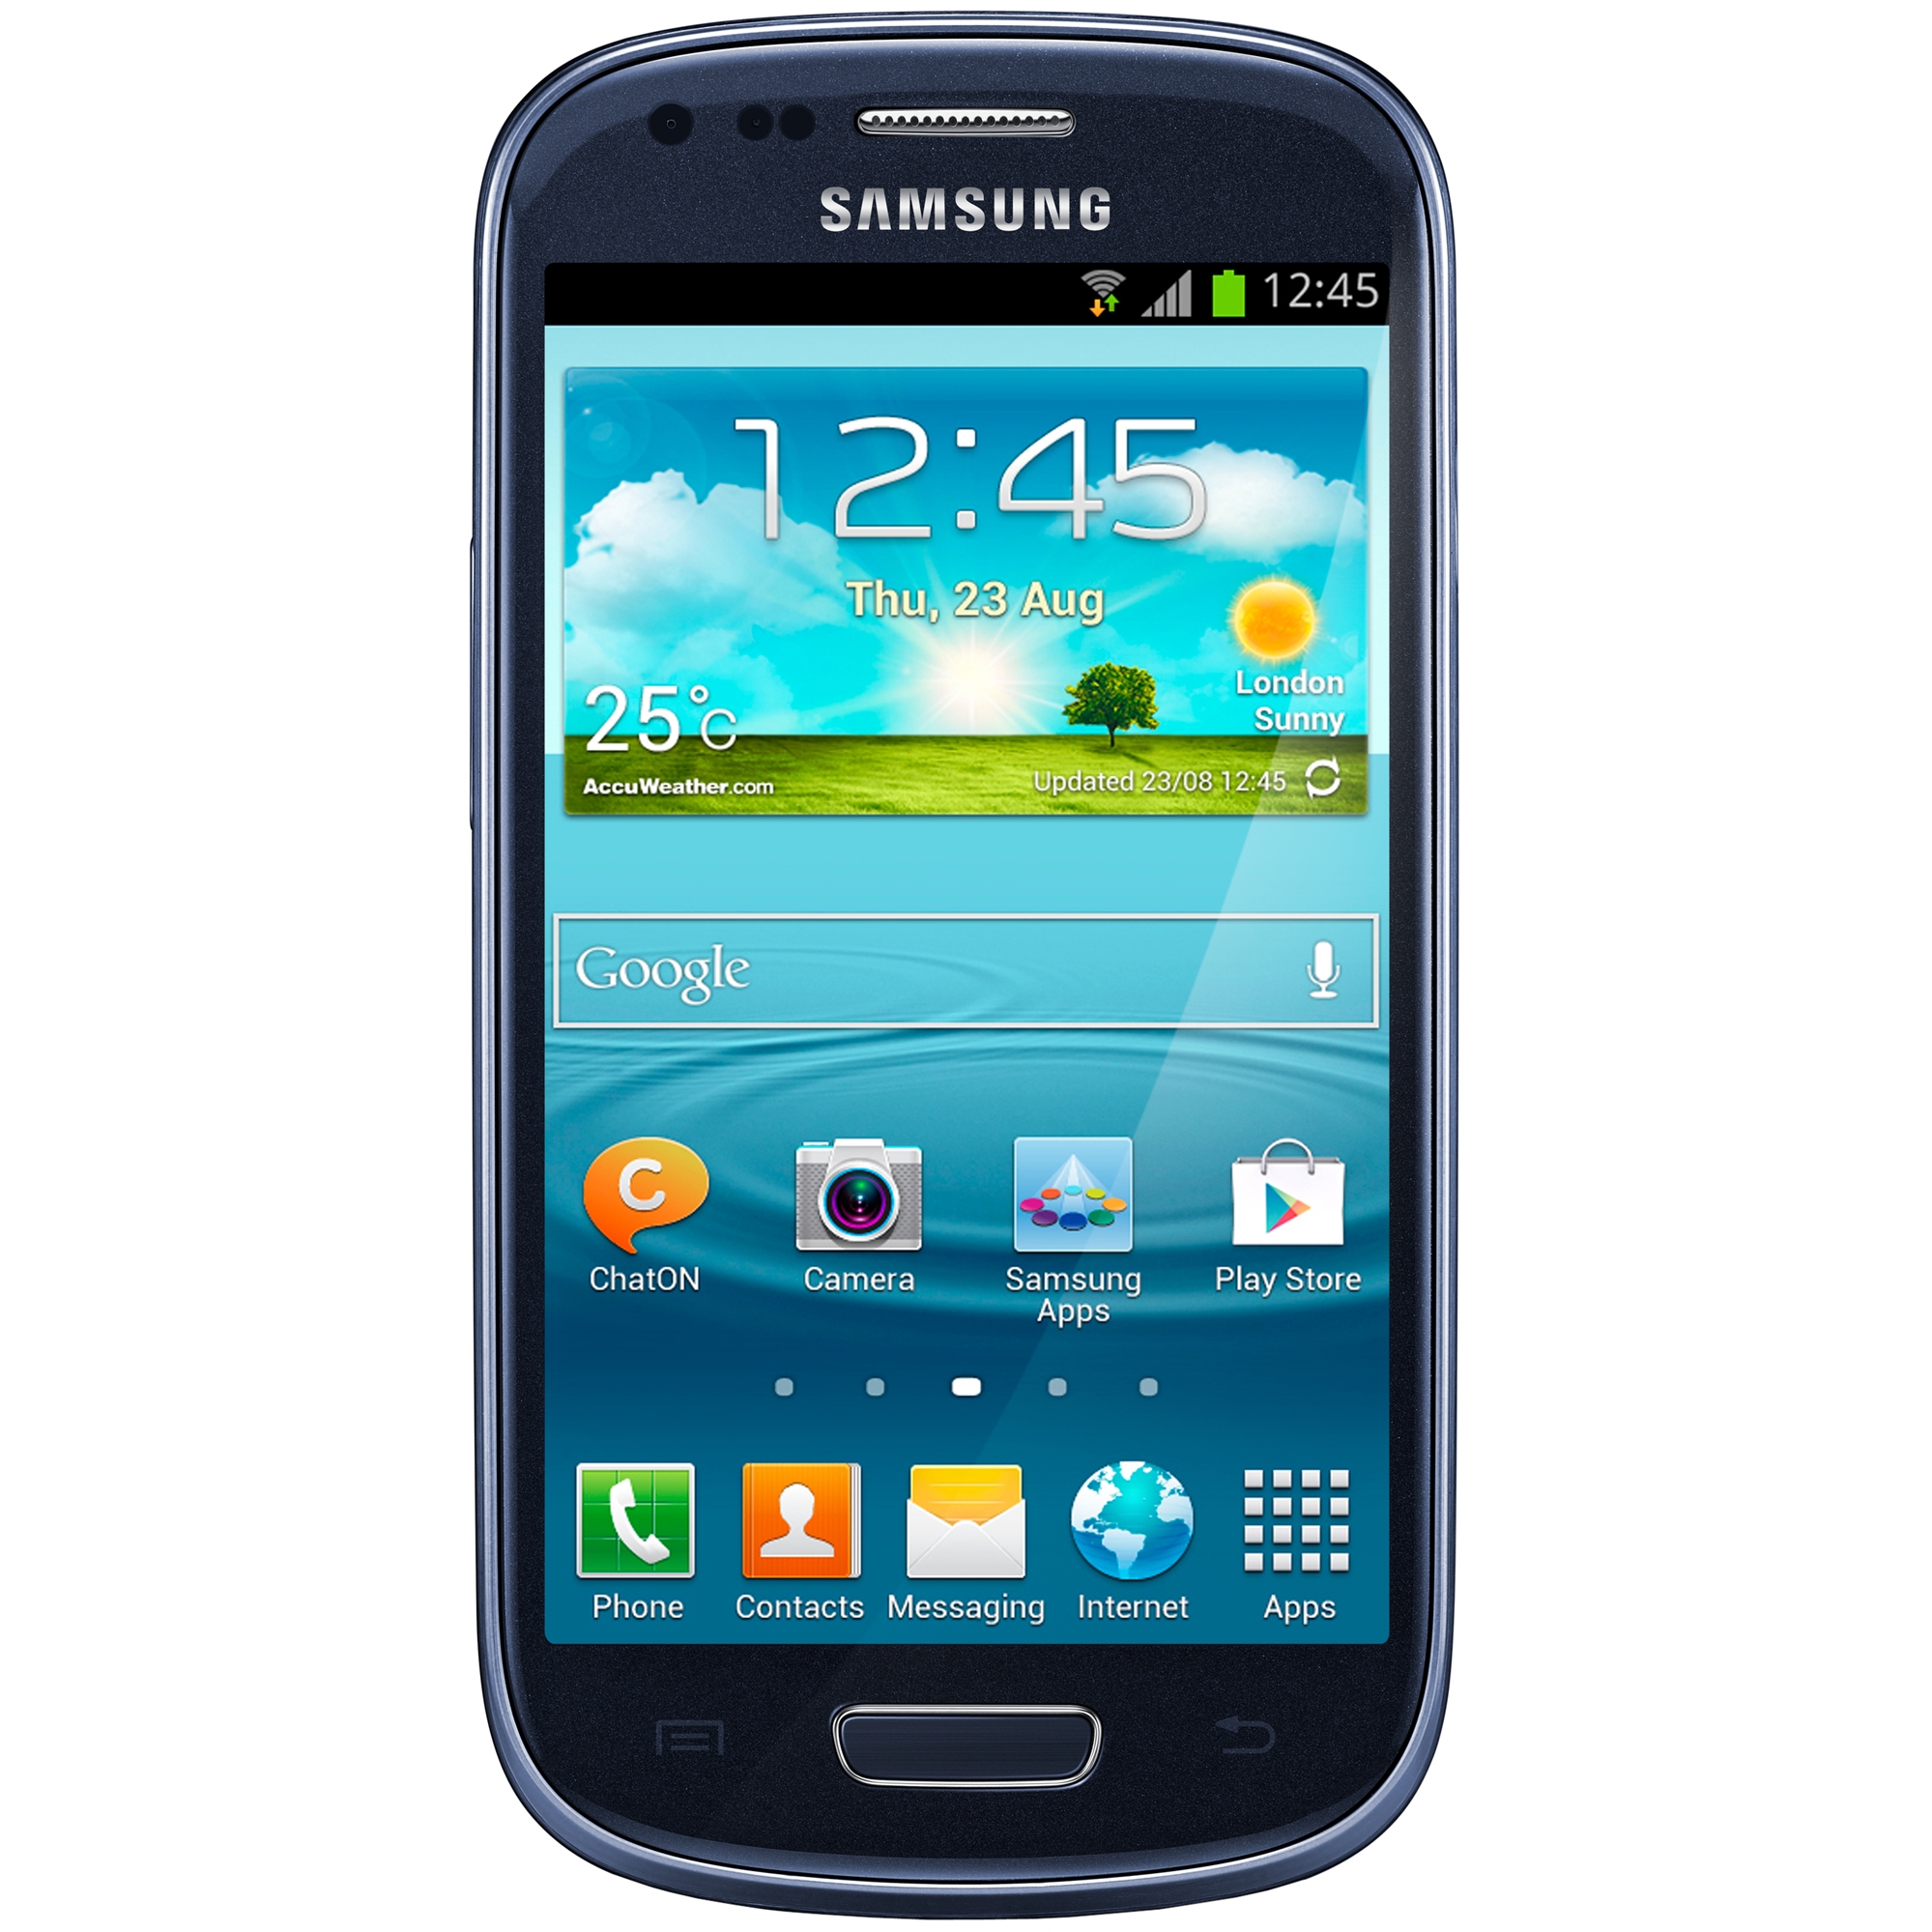 samsung galaxy s3 mini wallpaper,mobile phone,gadget,communication device,portable communications device,smartphone